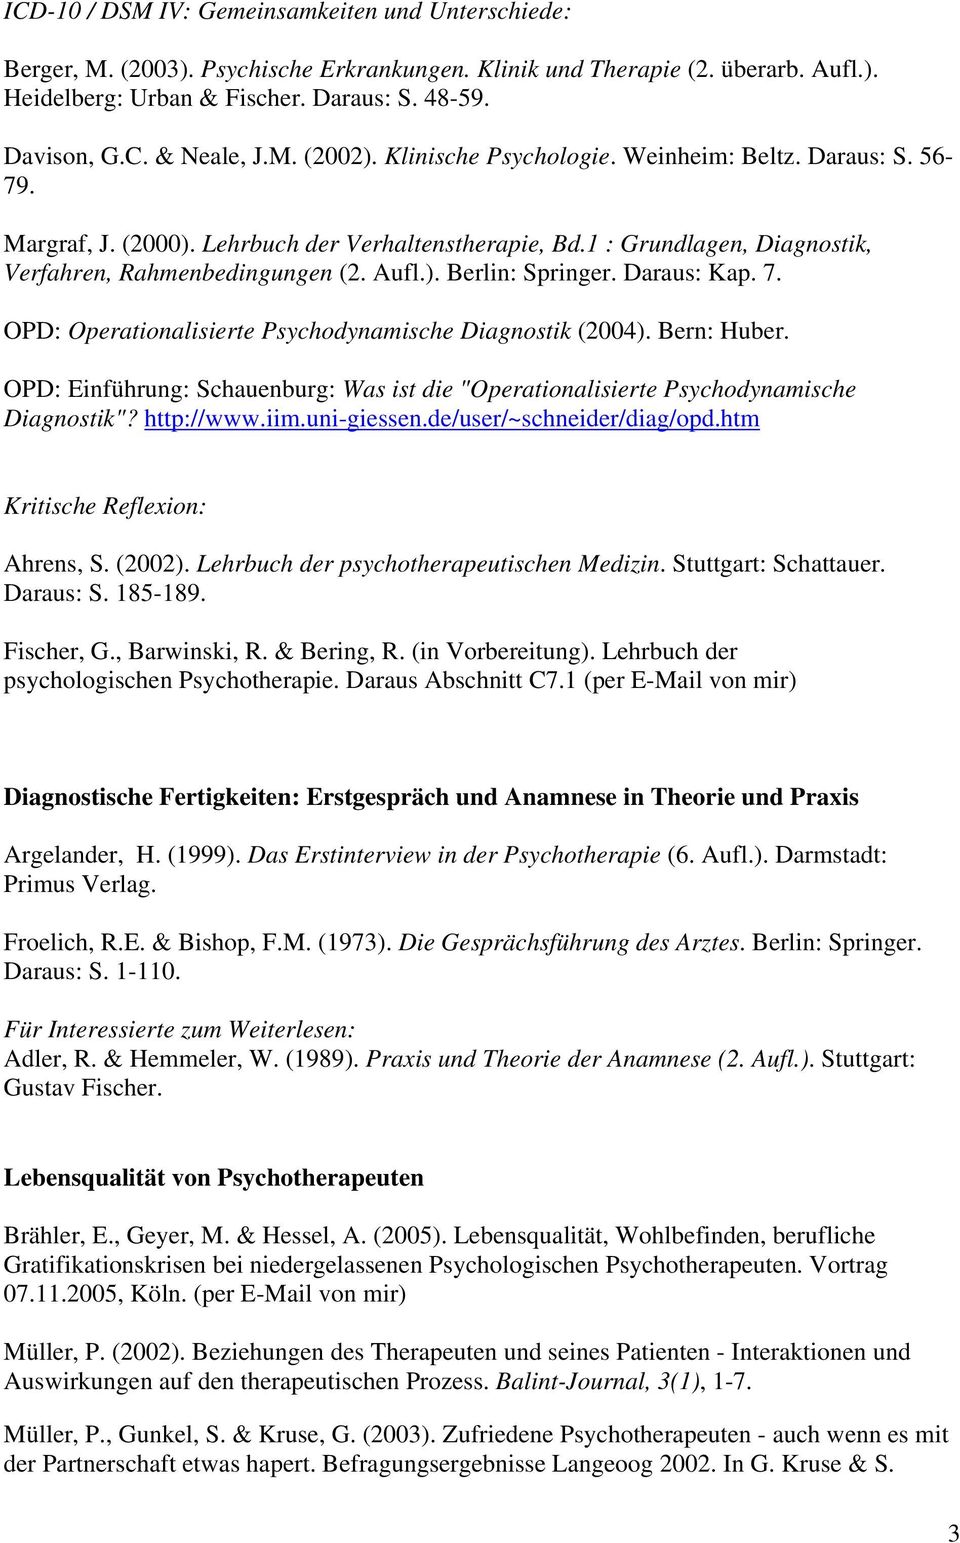 Daraus: Kap. 7. OPD: Operationalisierte Psychodynamische Diagnostik (2004). Bern: Huber. OPD: Einführung: Schauenburg: Was ist die "Operationalisierte Psychodynamische Diagnostik"? http://www.iim.